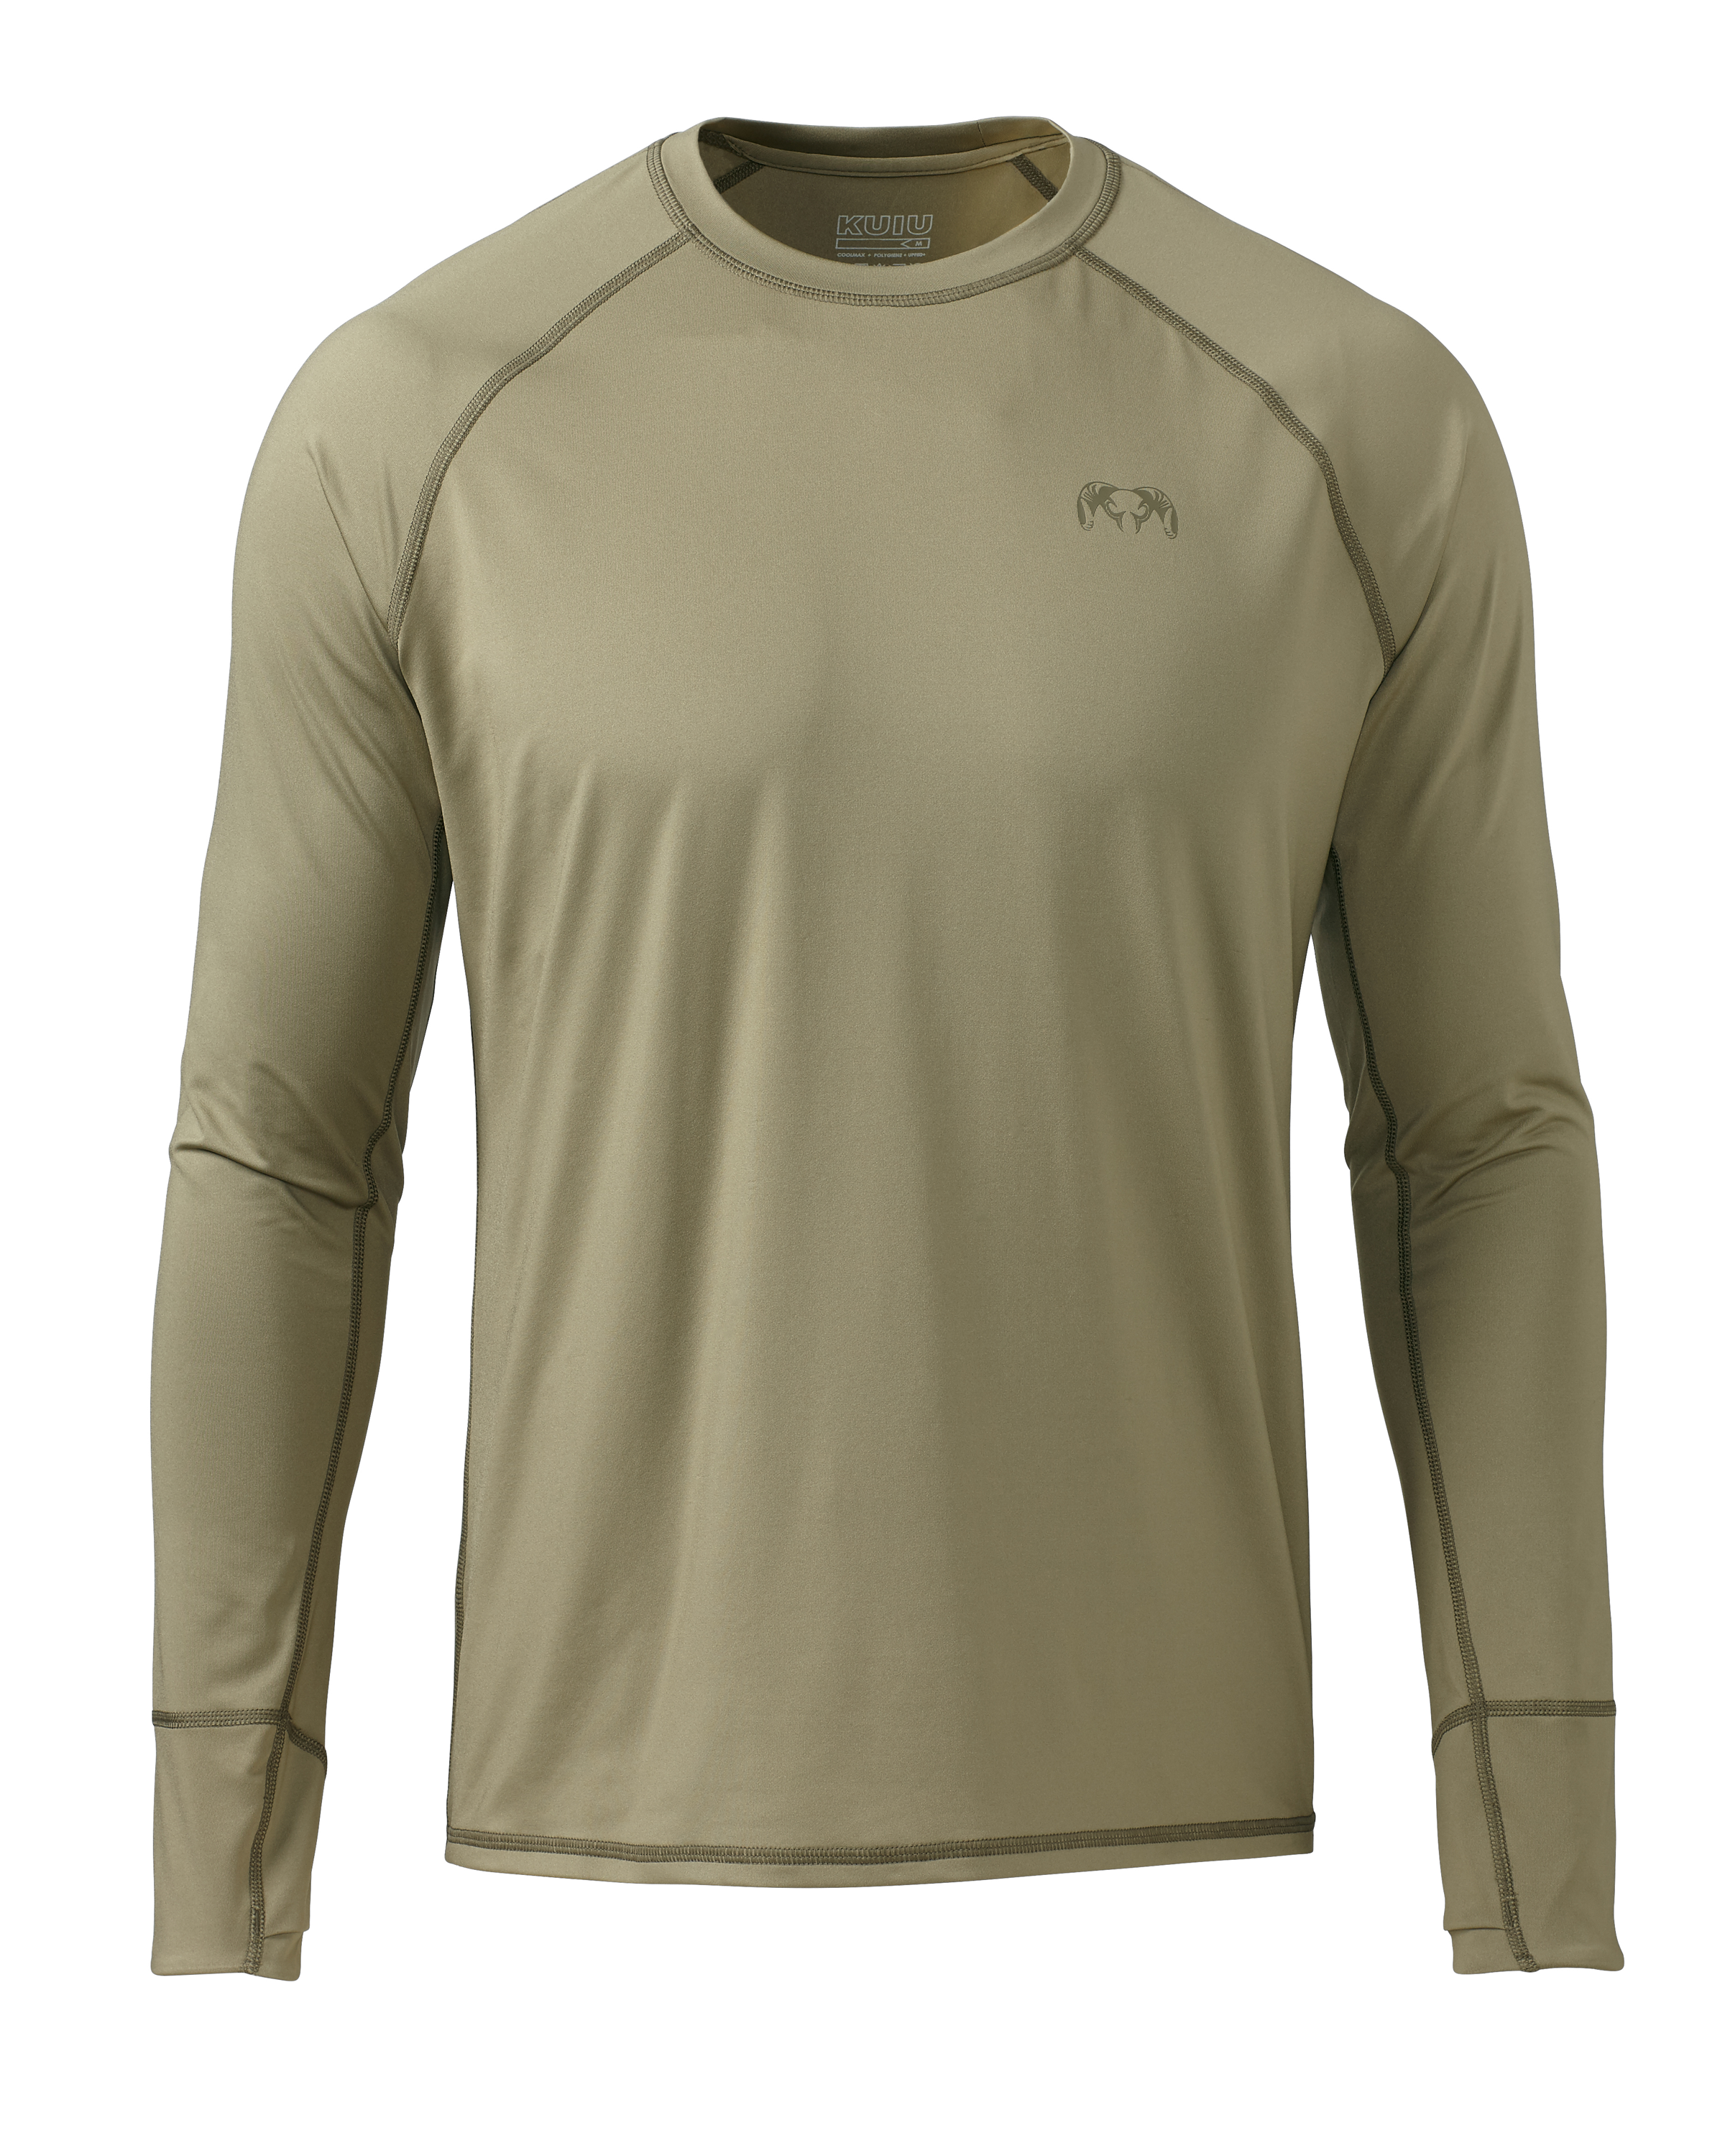 KUIU Gila Long Sleeves Crew Hunting Shirt in Khaki | Size 2XL